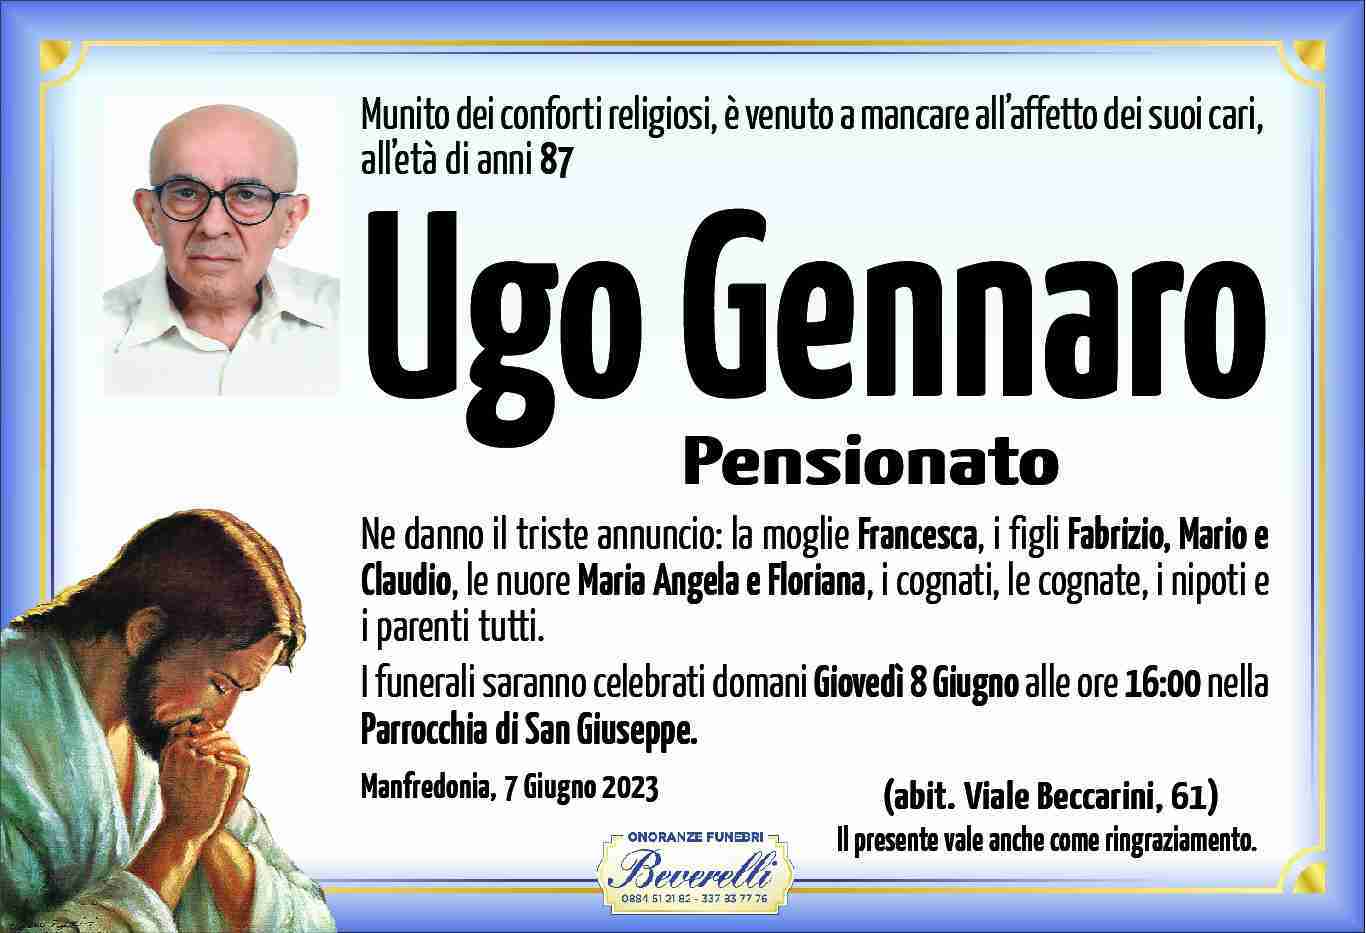 Ugo Gennaro